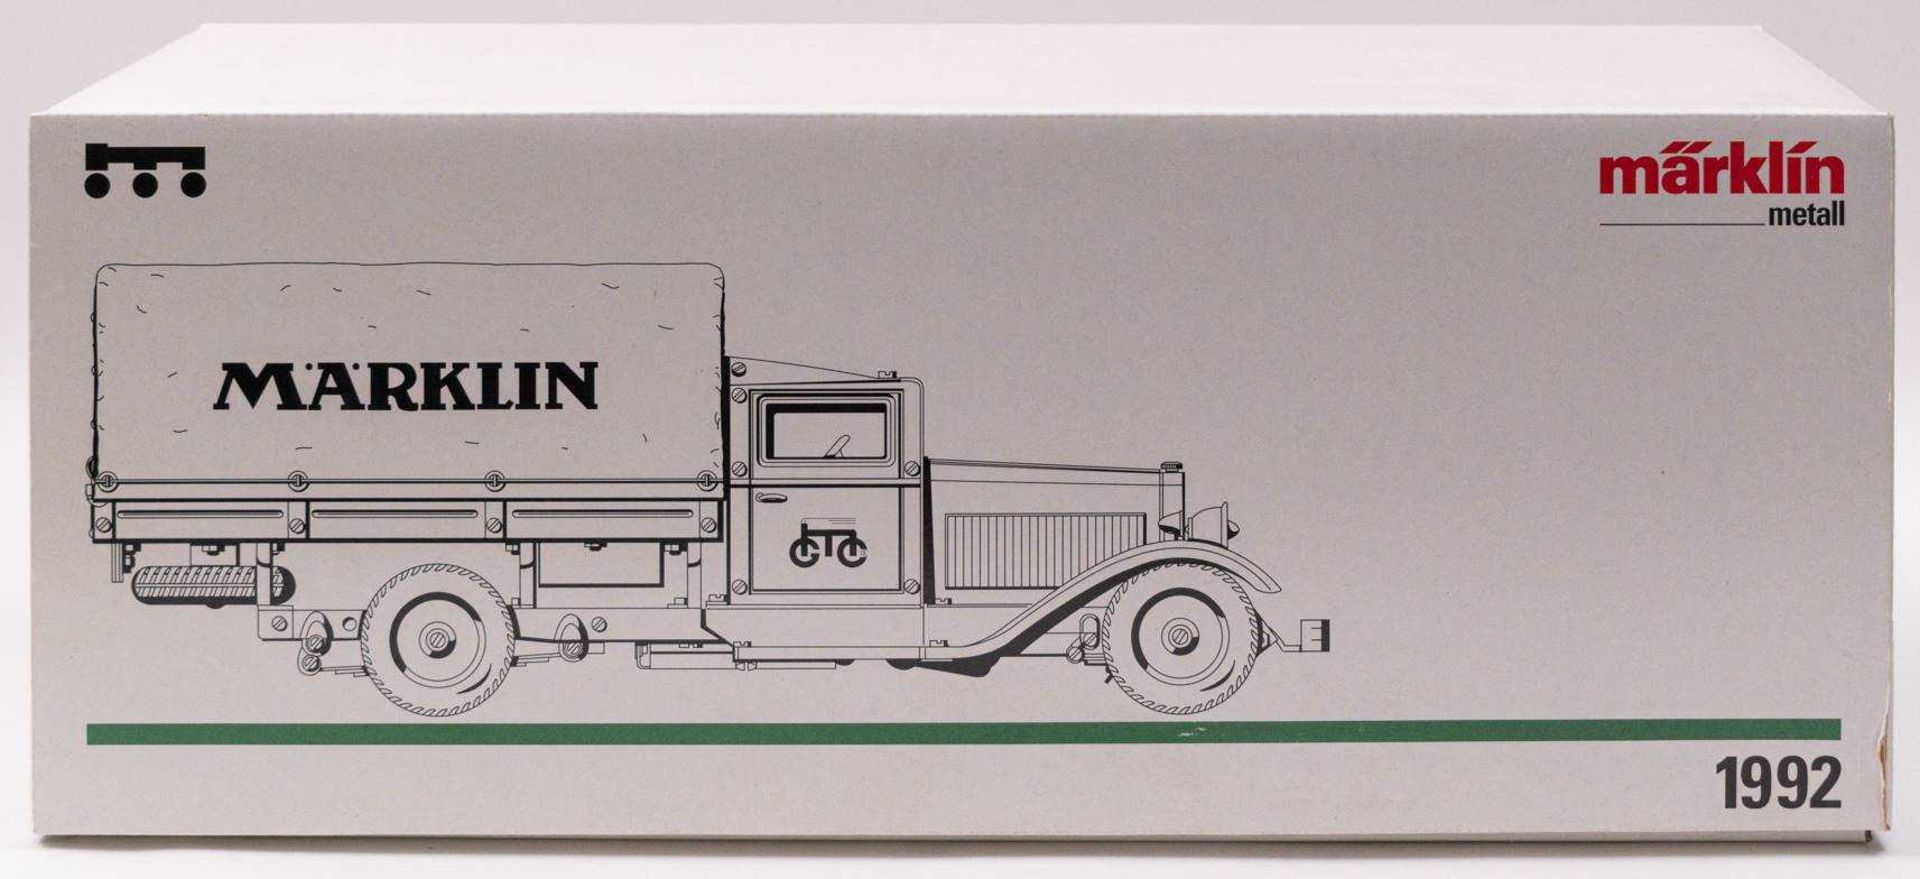 Special edition model slapsticks lorry \\Maerklin\\ with clockwork mechanism, measurement 1: 16, lim - Image 5 of 5